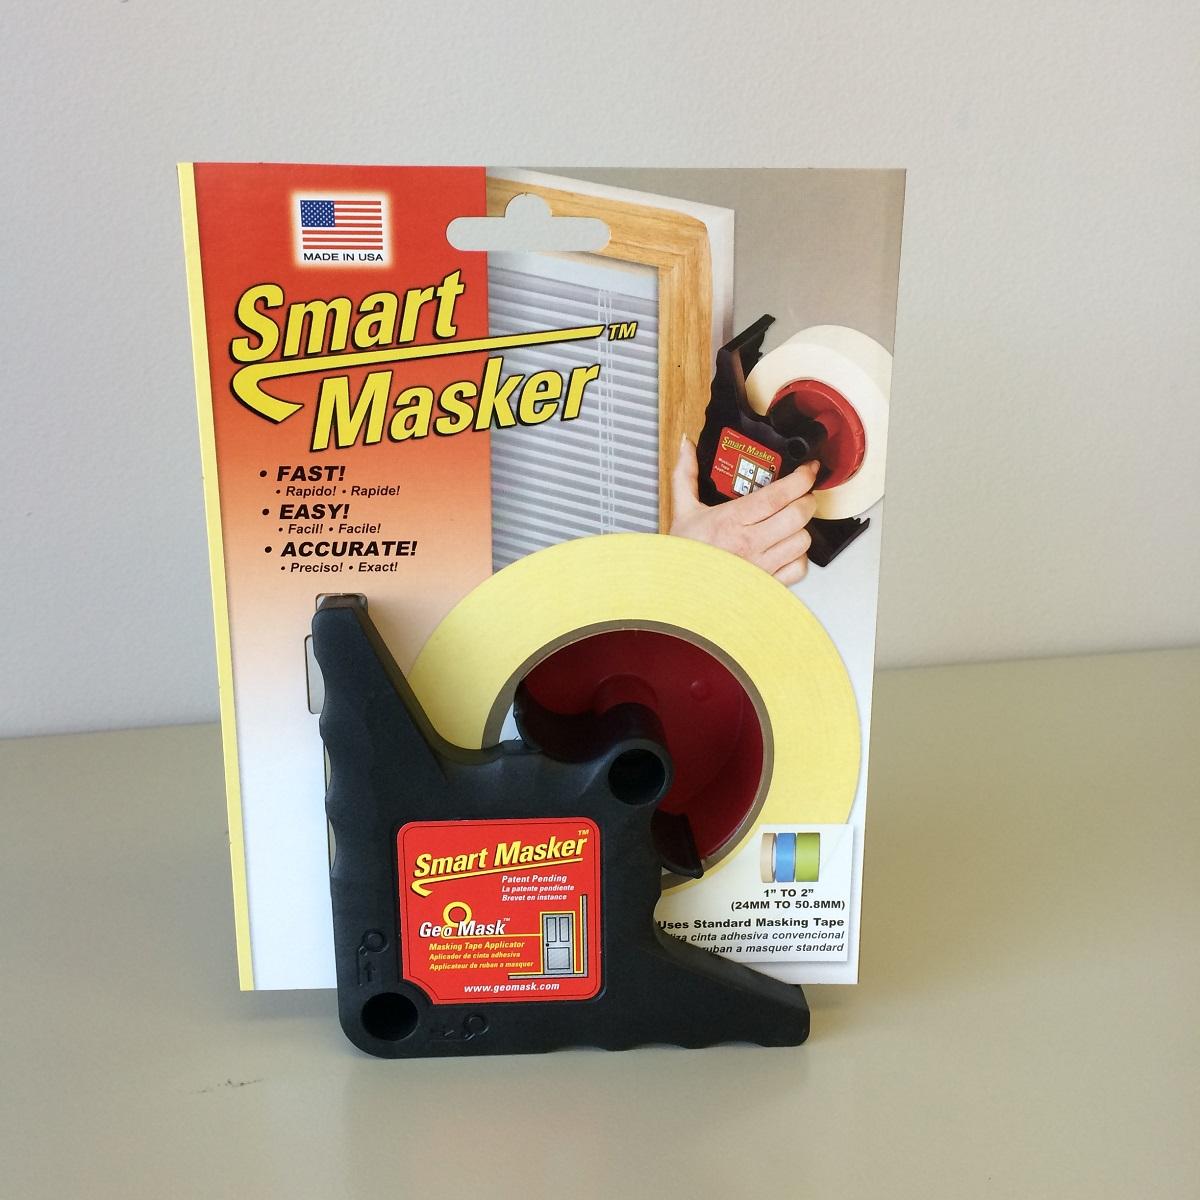 Smart Masker Pro - Masking Tape Tool - Applicator